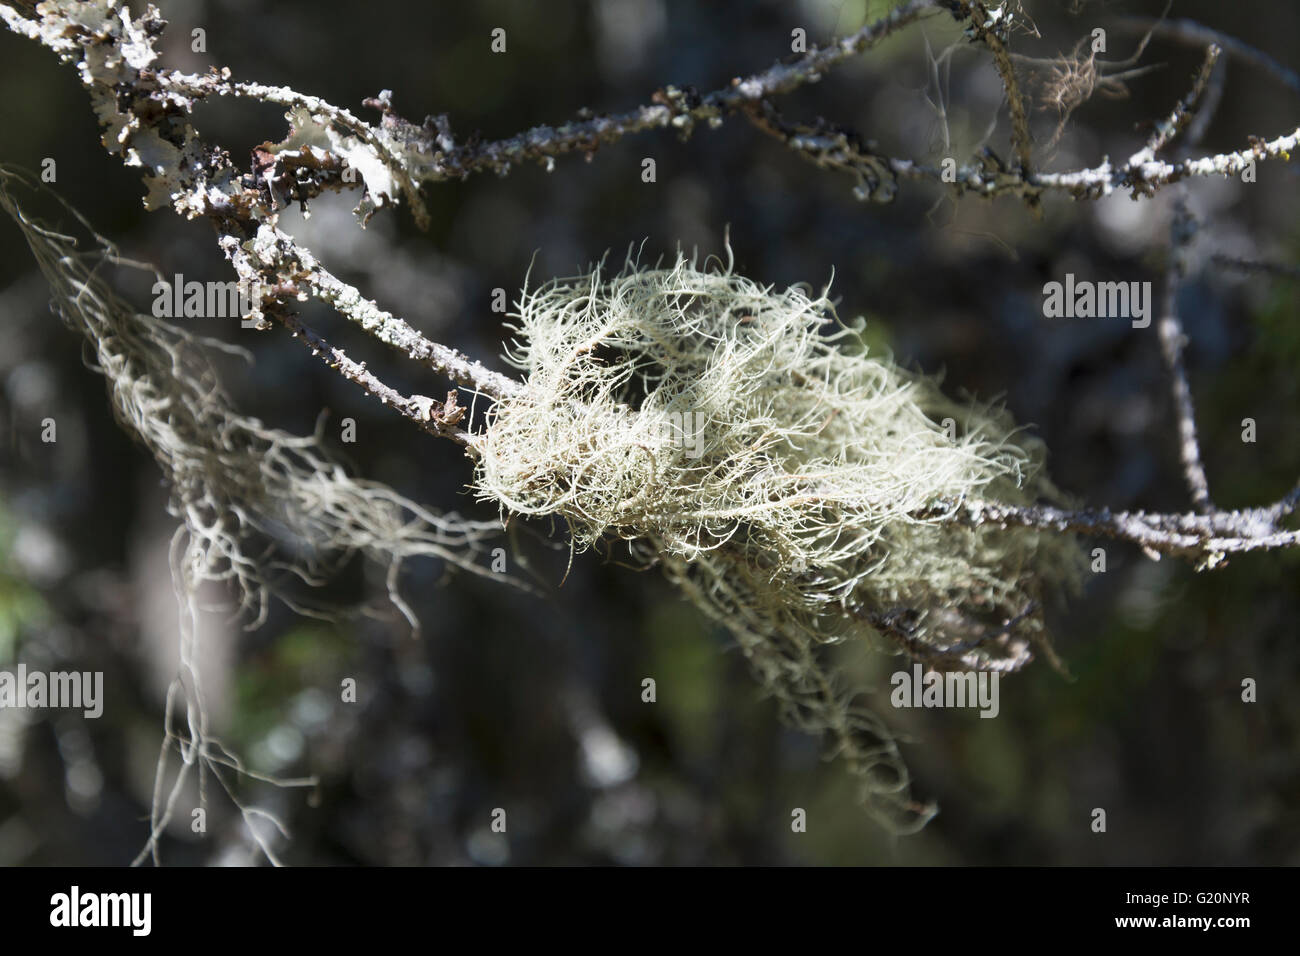 Bearded moss or Bearded lichen (Usnea) on a tree twig Stock Photo